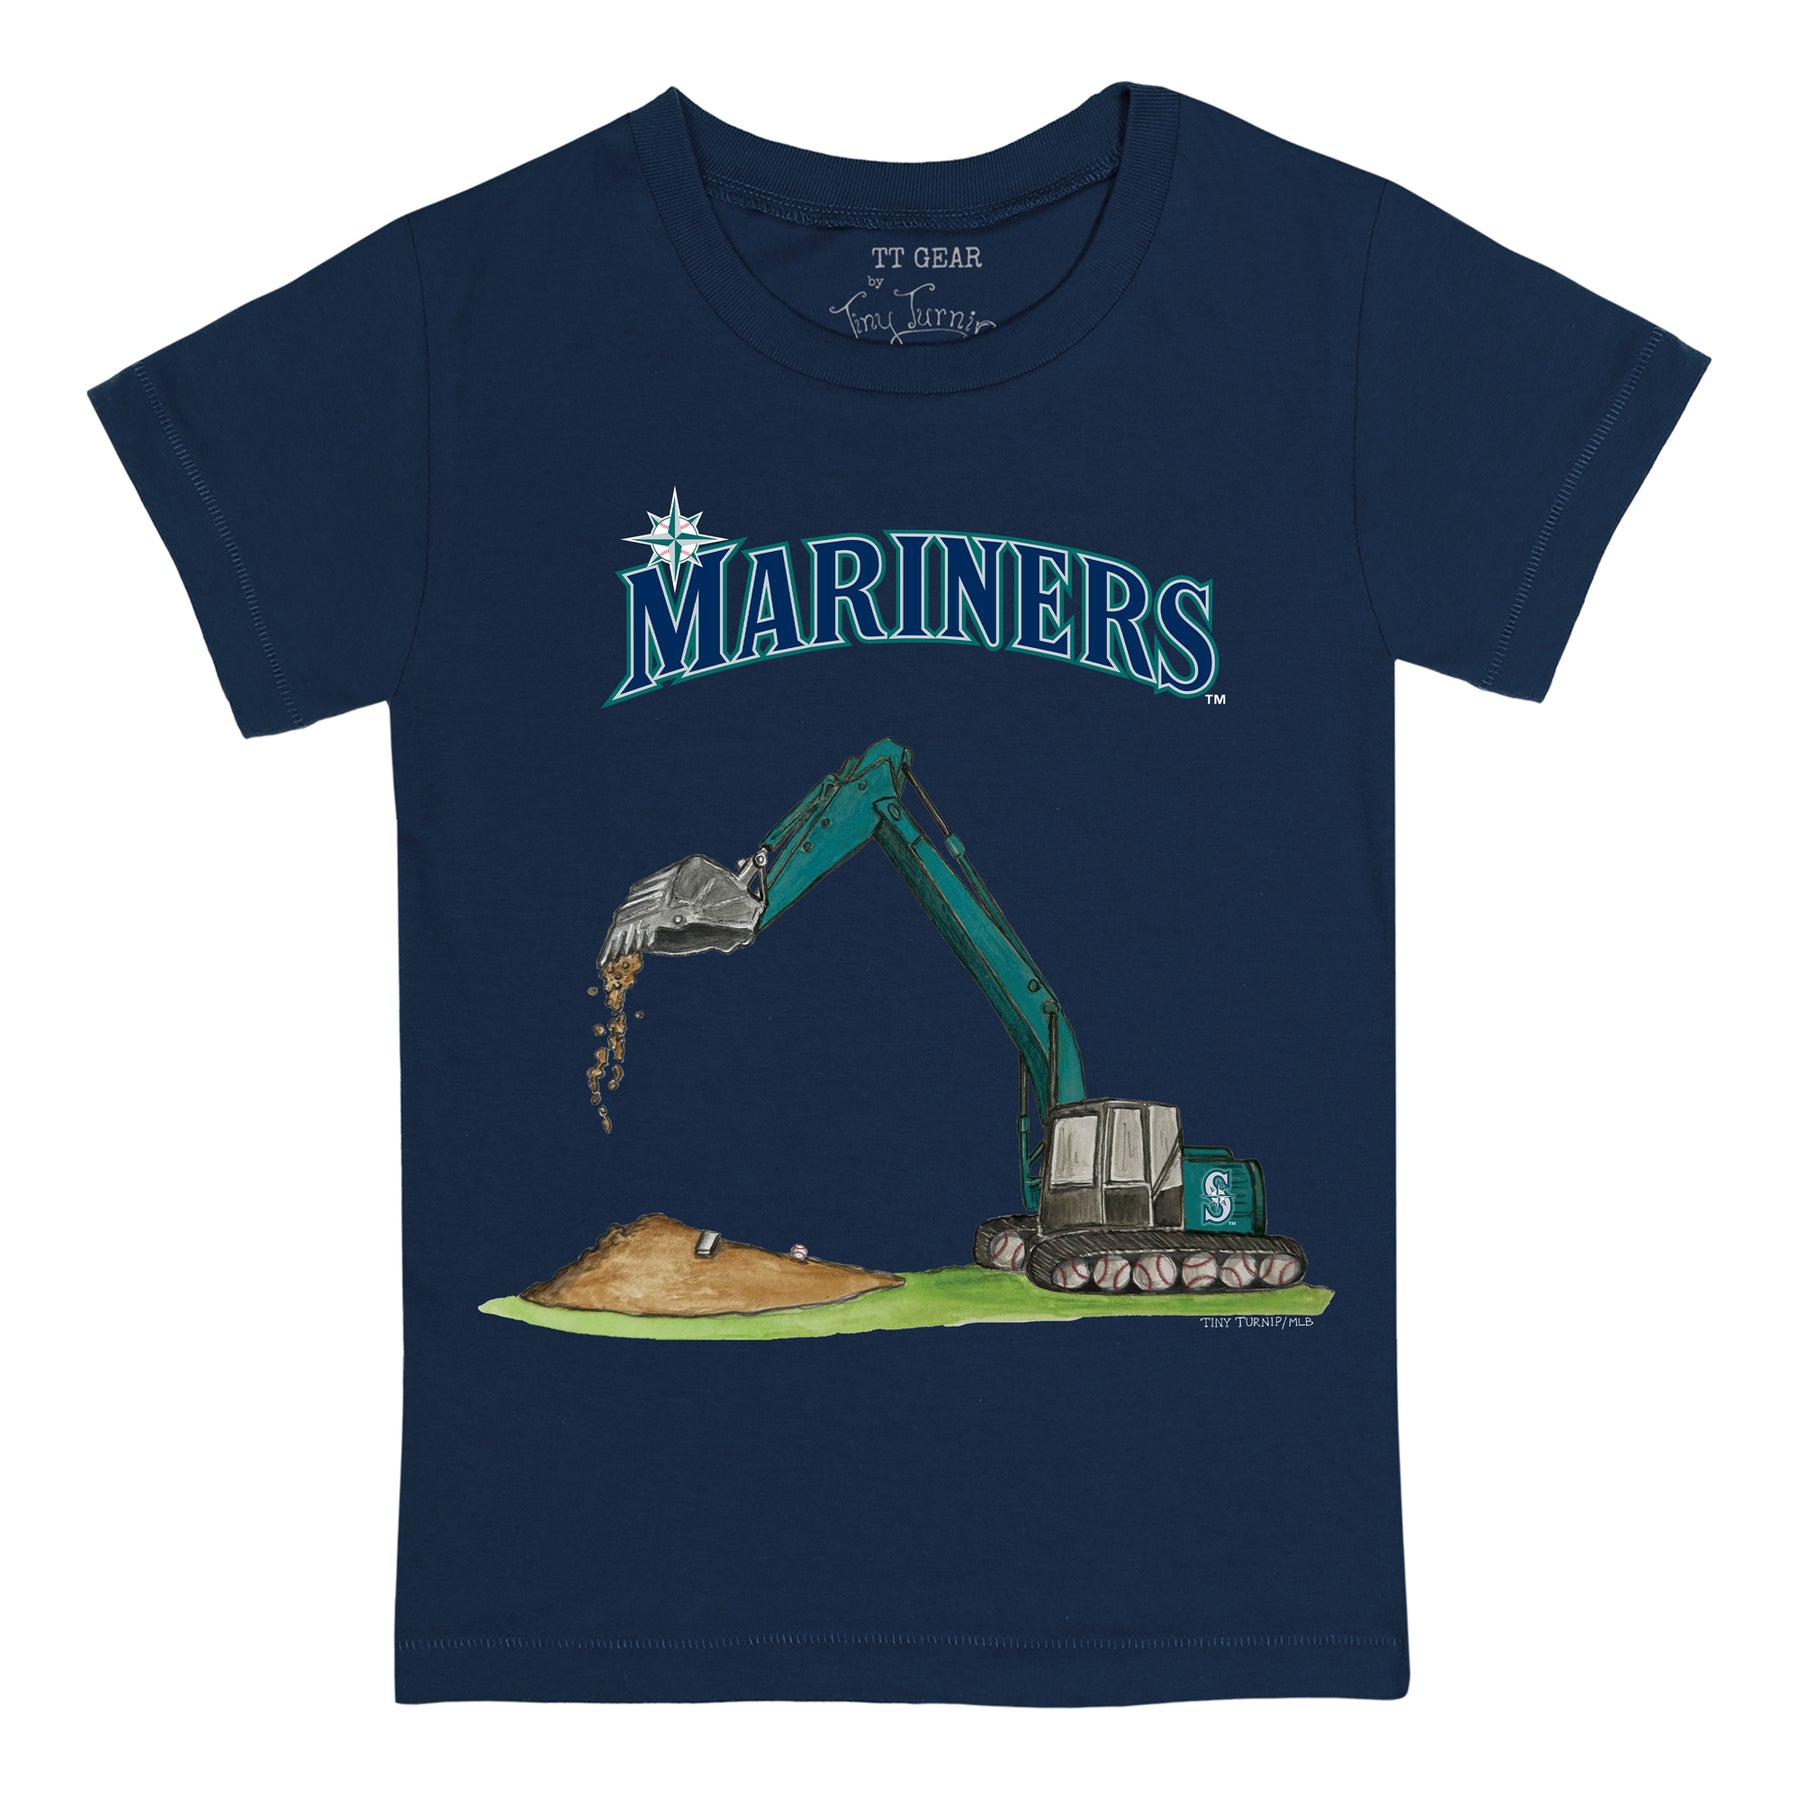 Seattle Mariners Excavator Tee Shirt